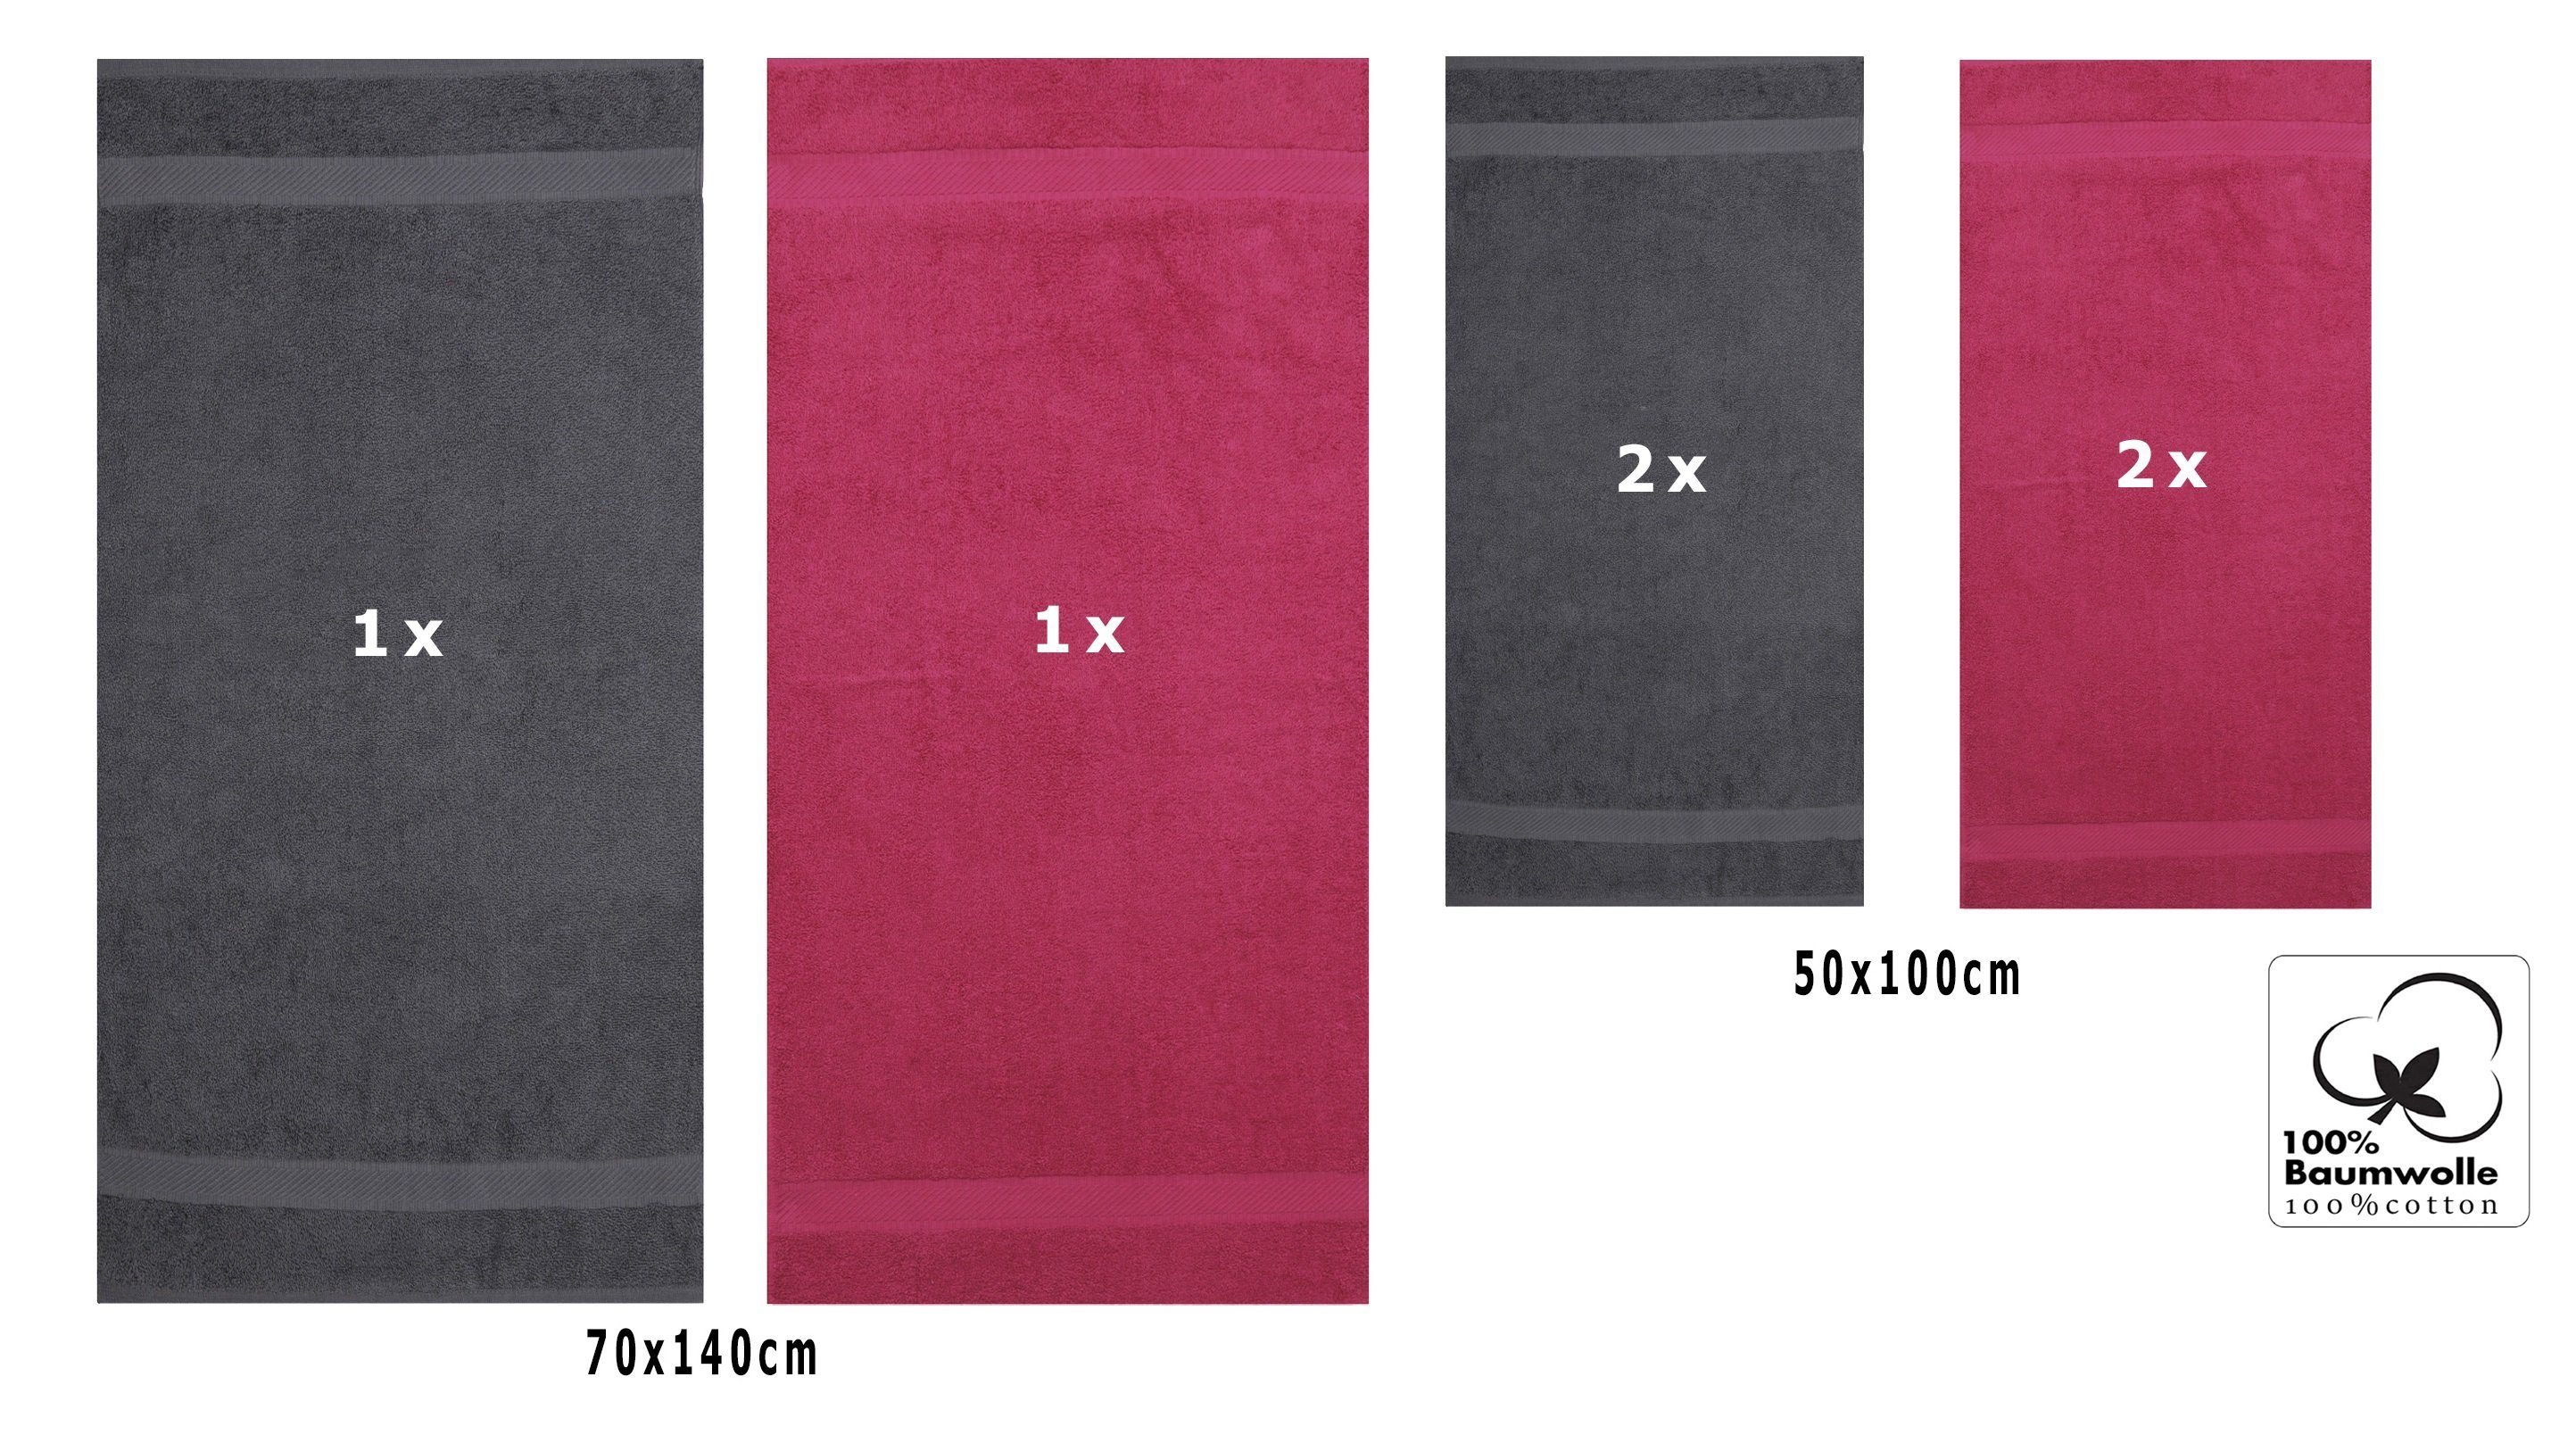 Baumwolle Set Betz Handtücher, Liegetücher Palermo 2x 70x140 6er 100% cm anthrazit/cranberry 4x Handtuch